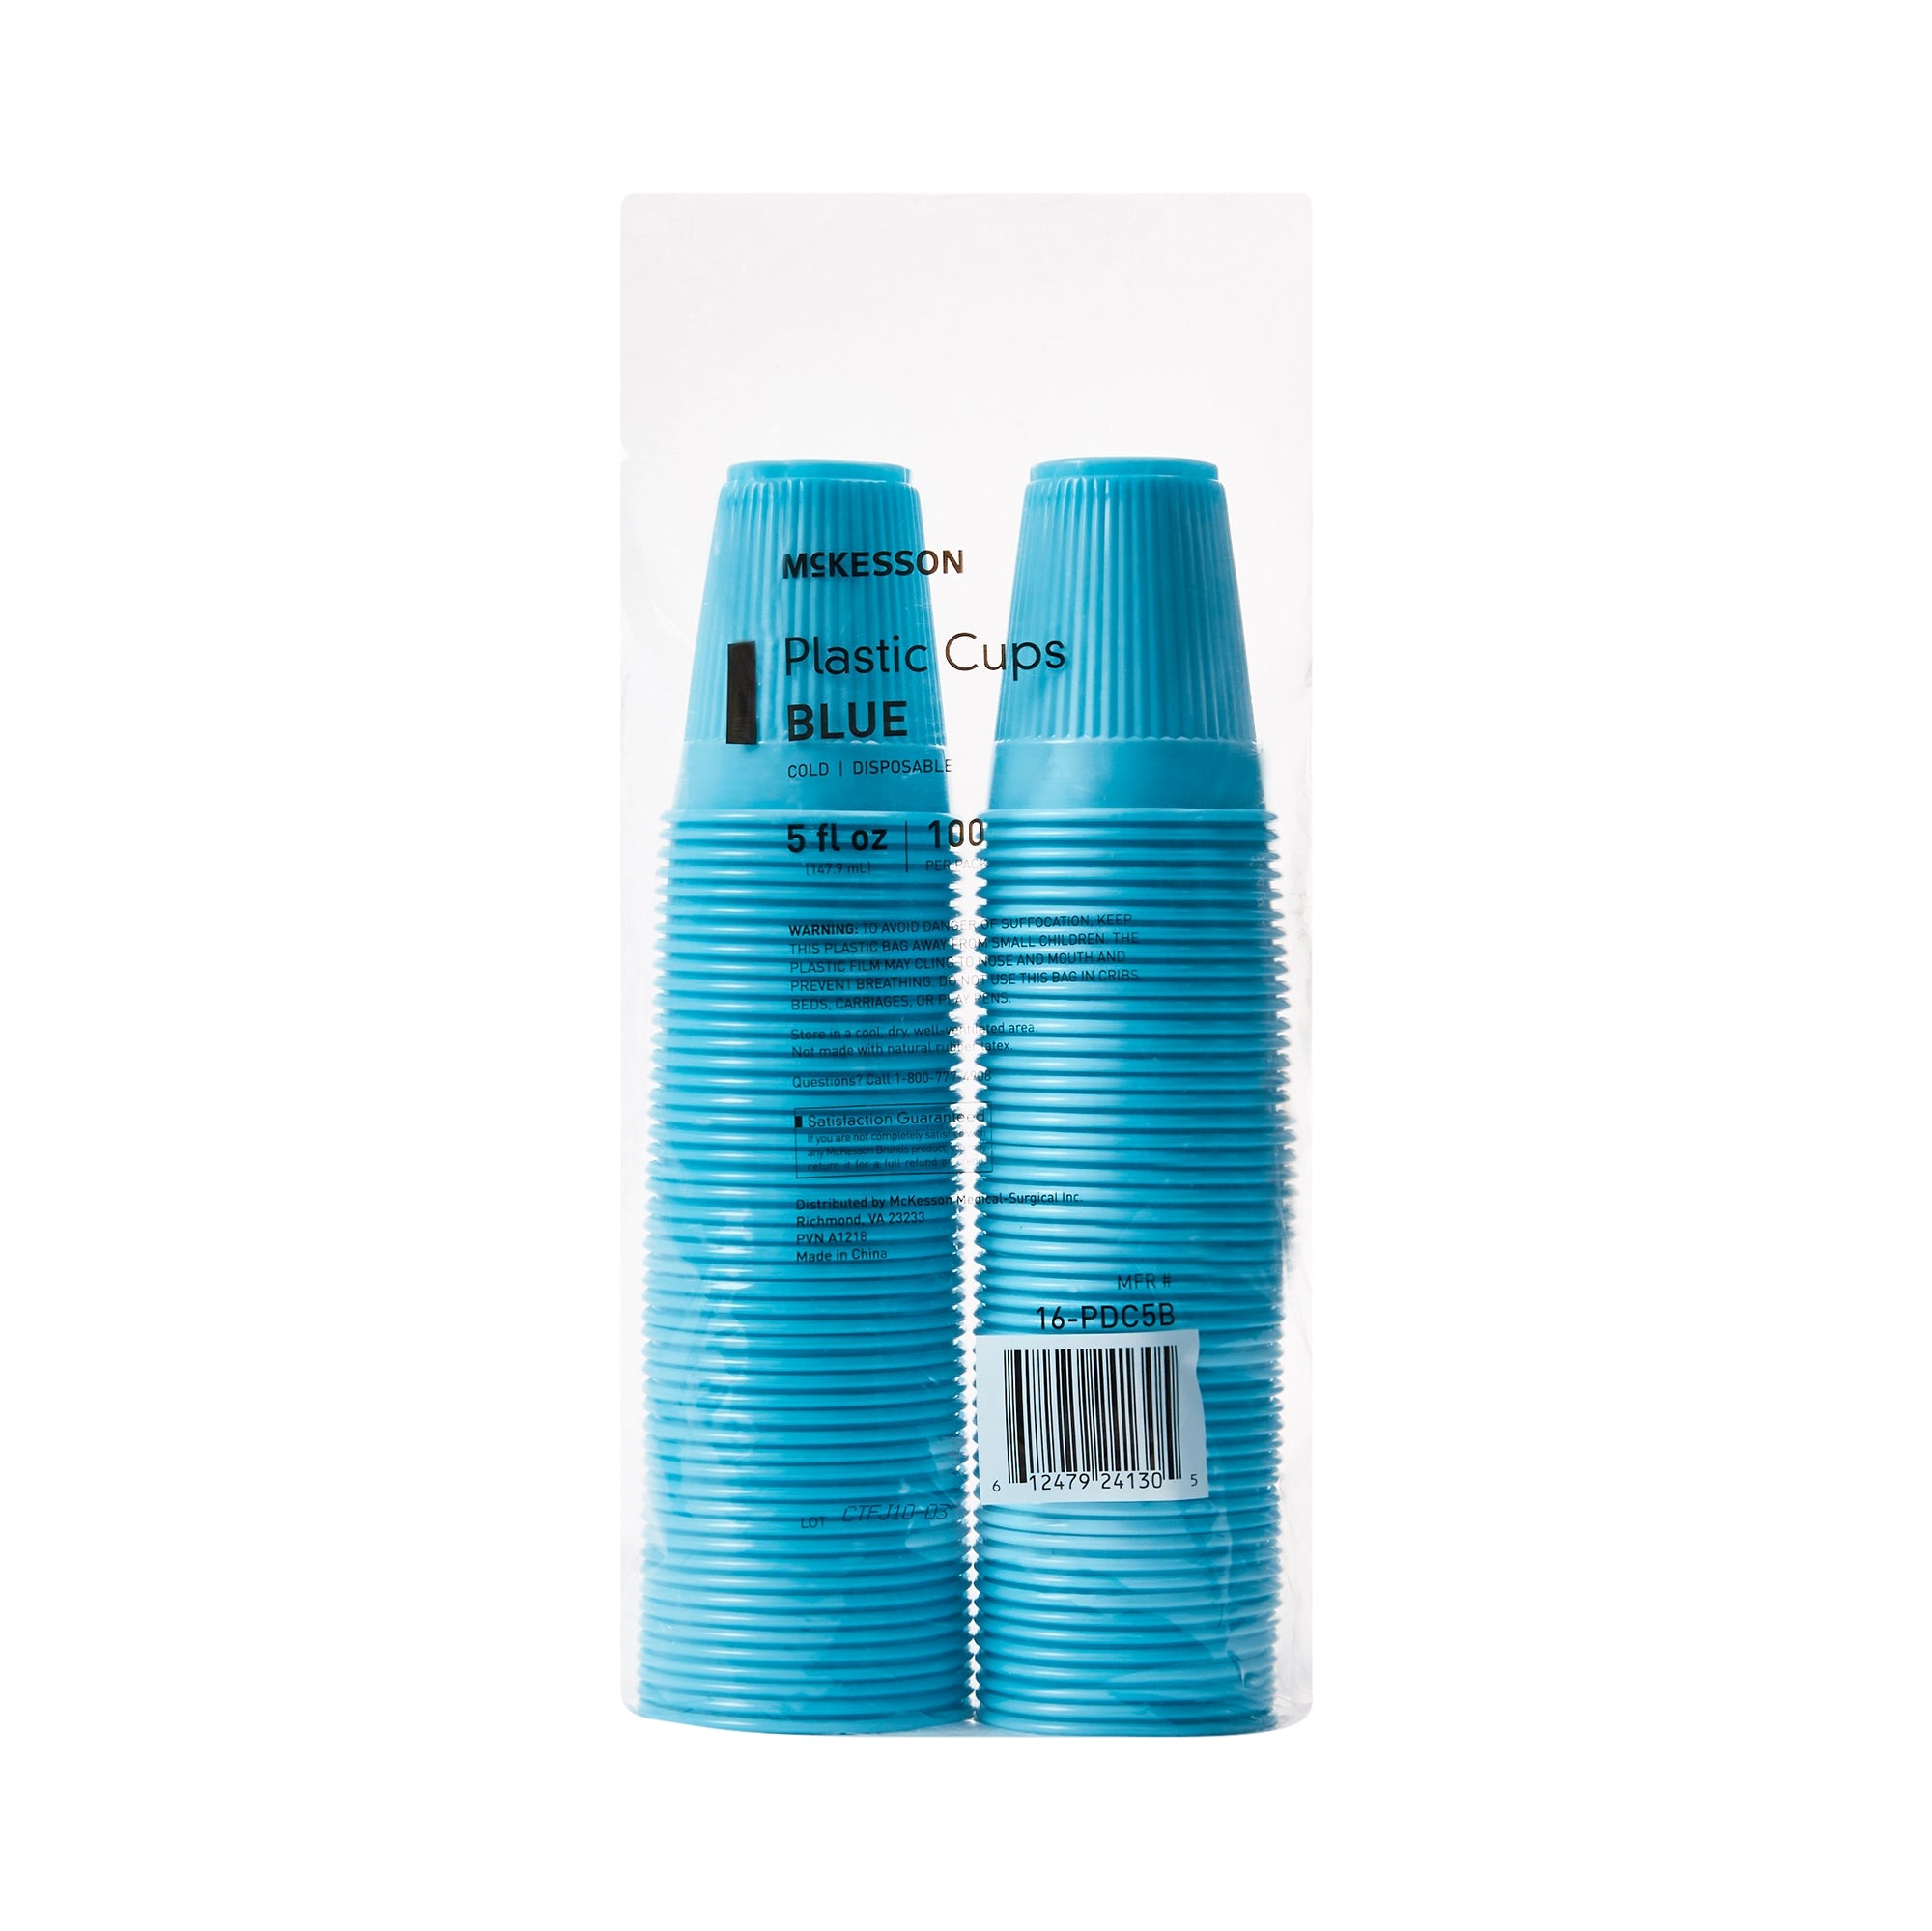 McKesson 5 oz Blue Disposable Polypropylene Drinking Cups - Bulk 2500 Pack